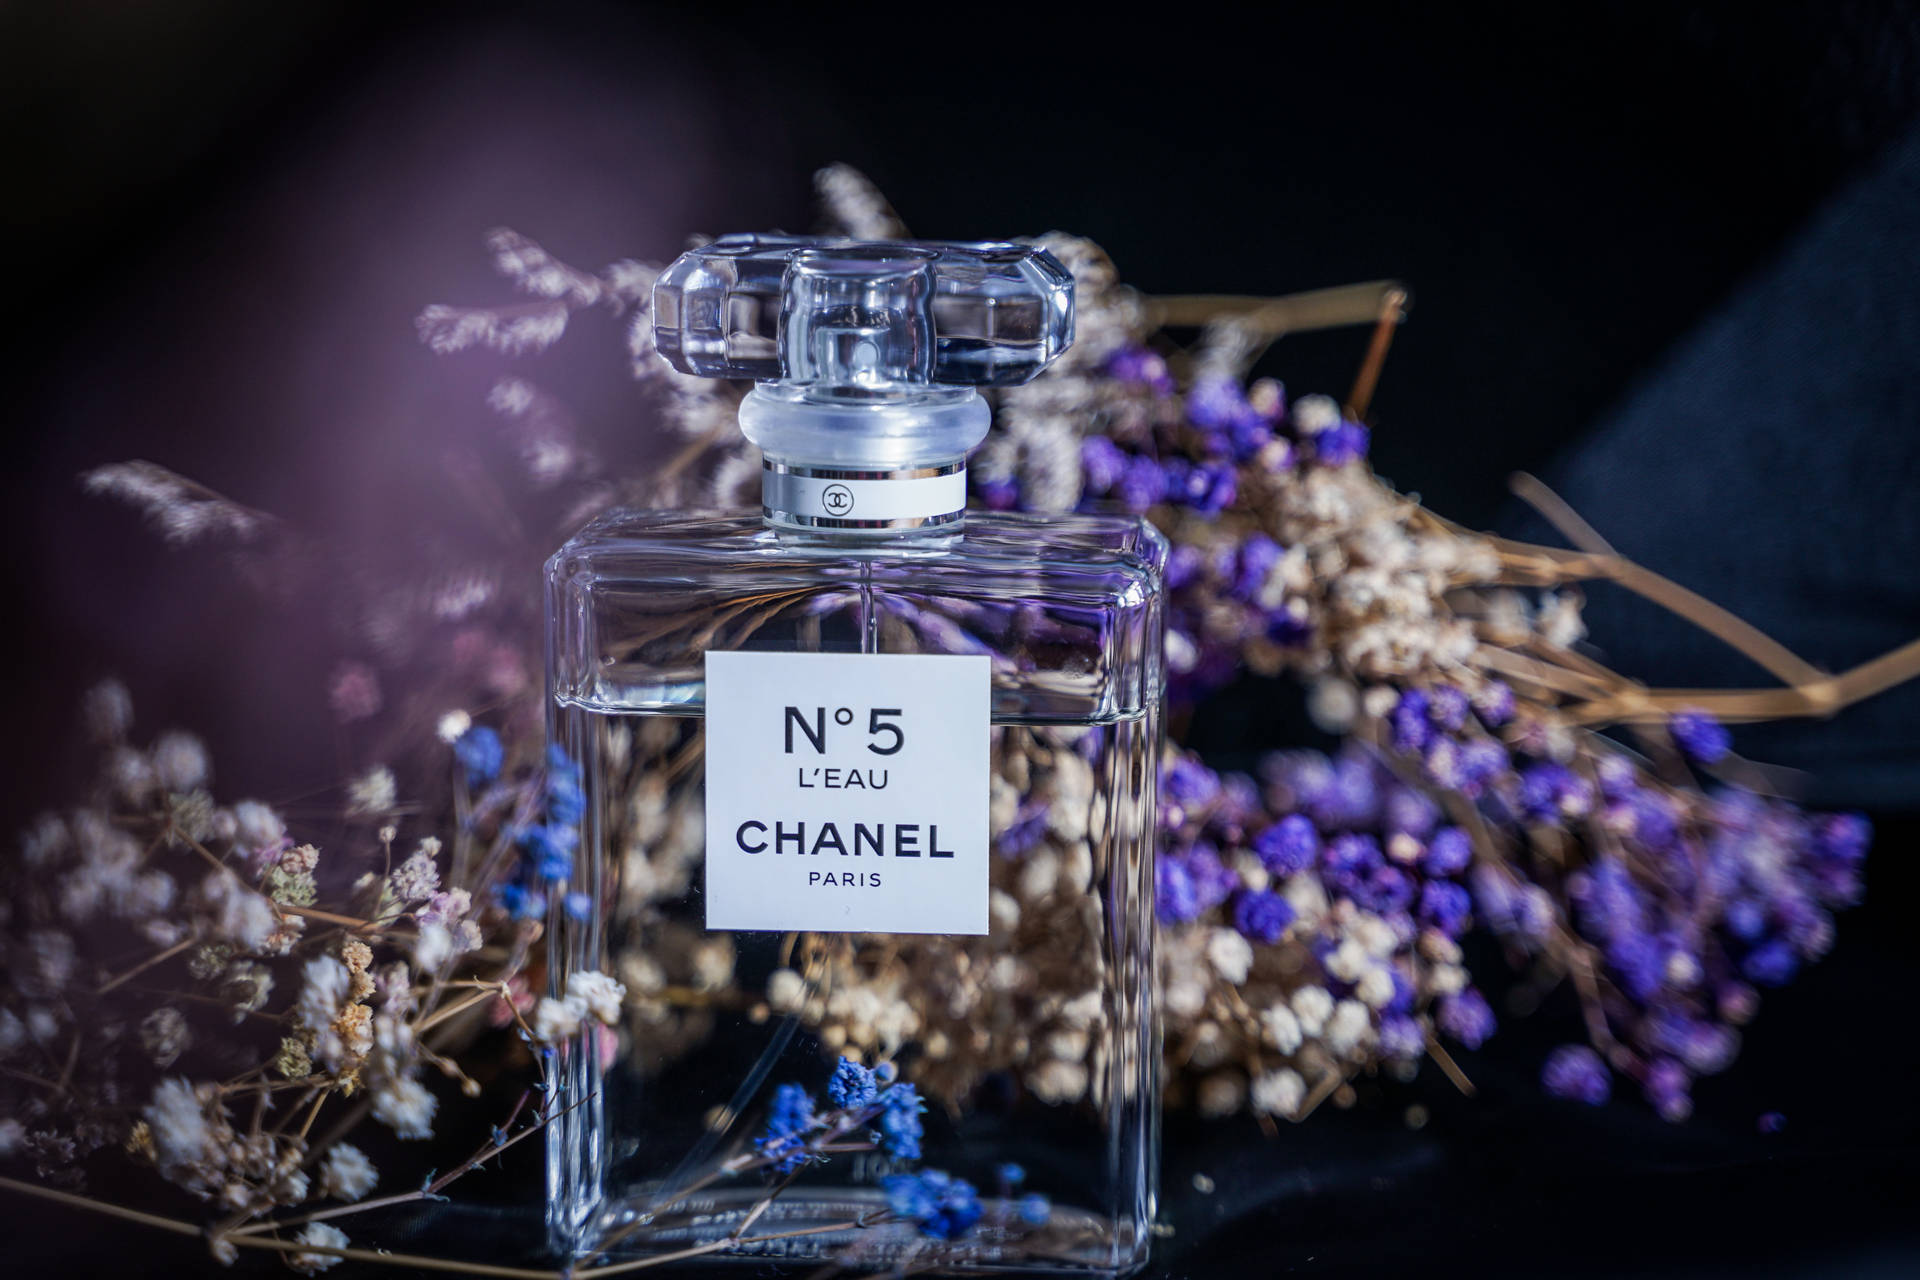 Chanel No 5 Perfume Flowers in Purple